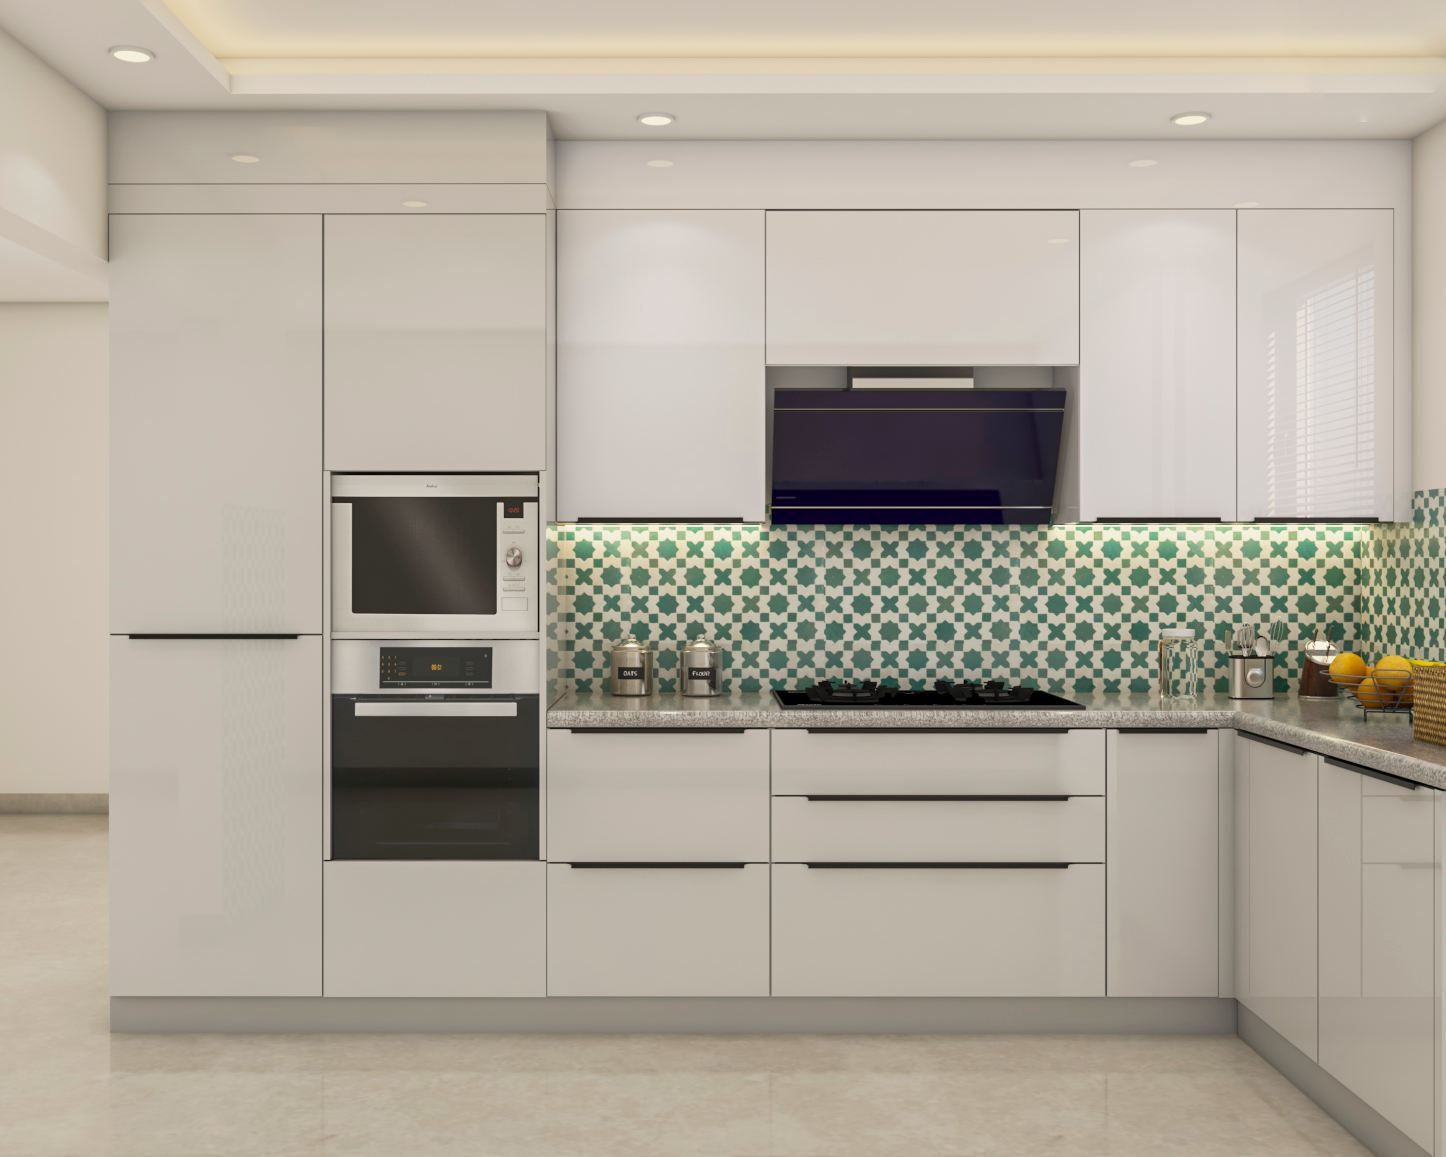 U-Shaped Modern Kitchen Design With Green Dado Tiles